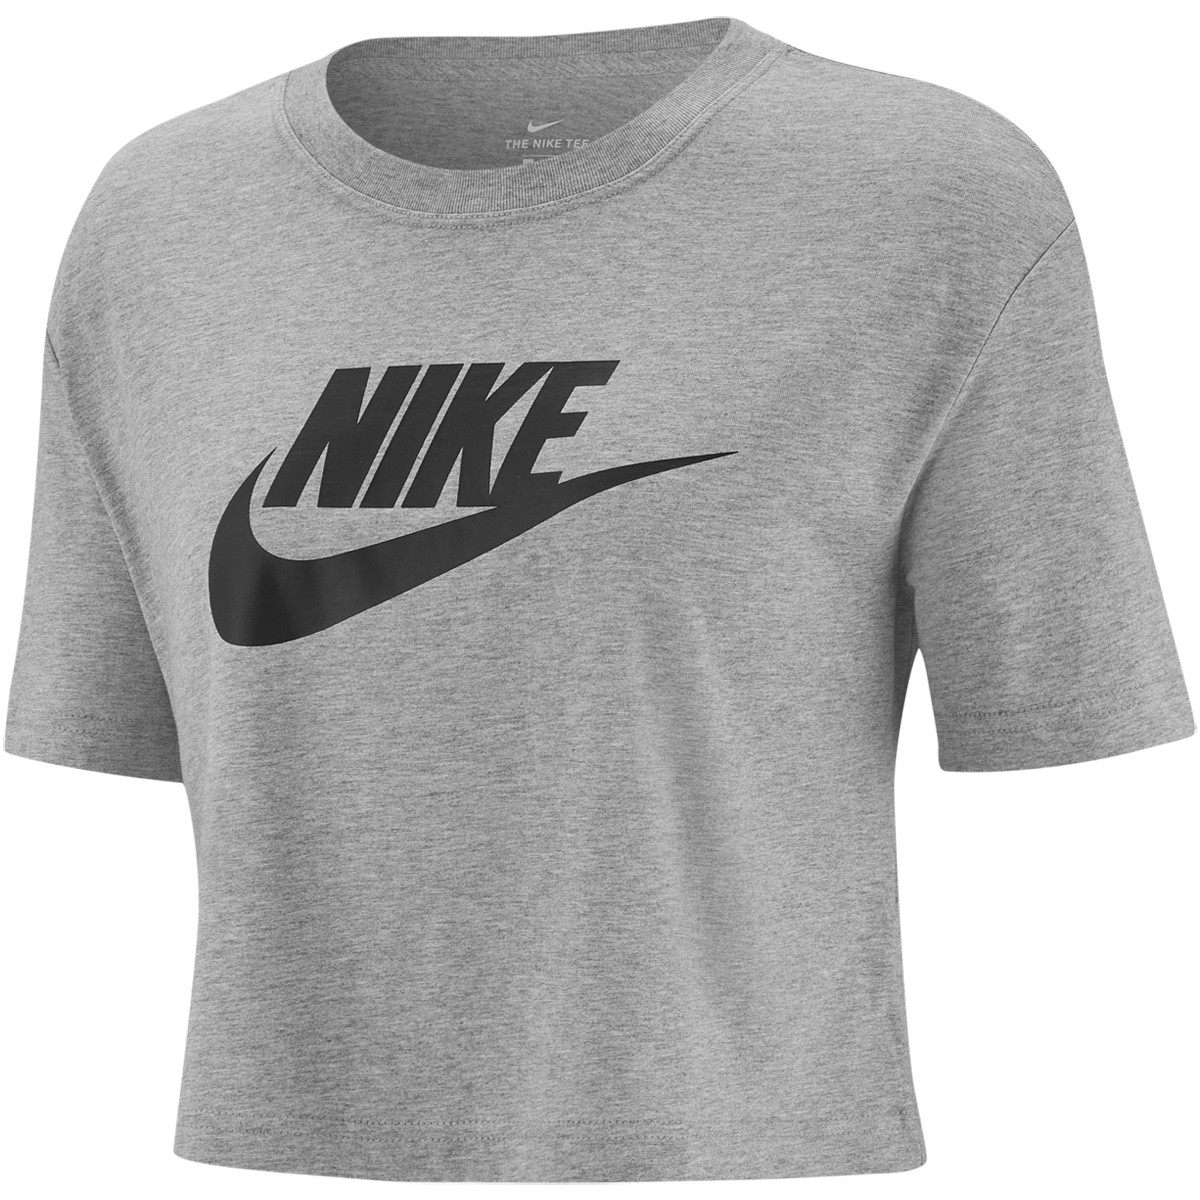 Tee-Shirt Nike Femme Sportswear Essential Gris 